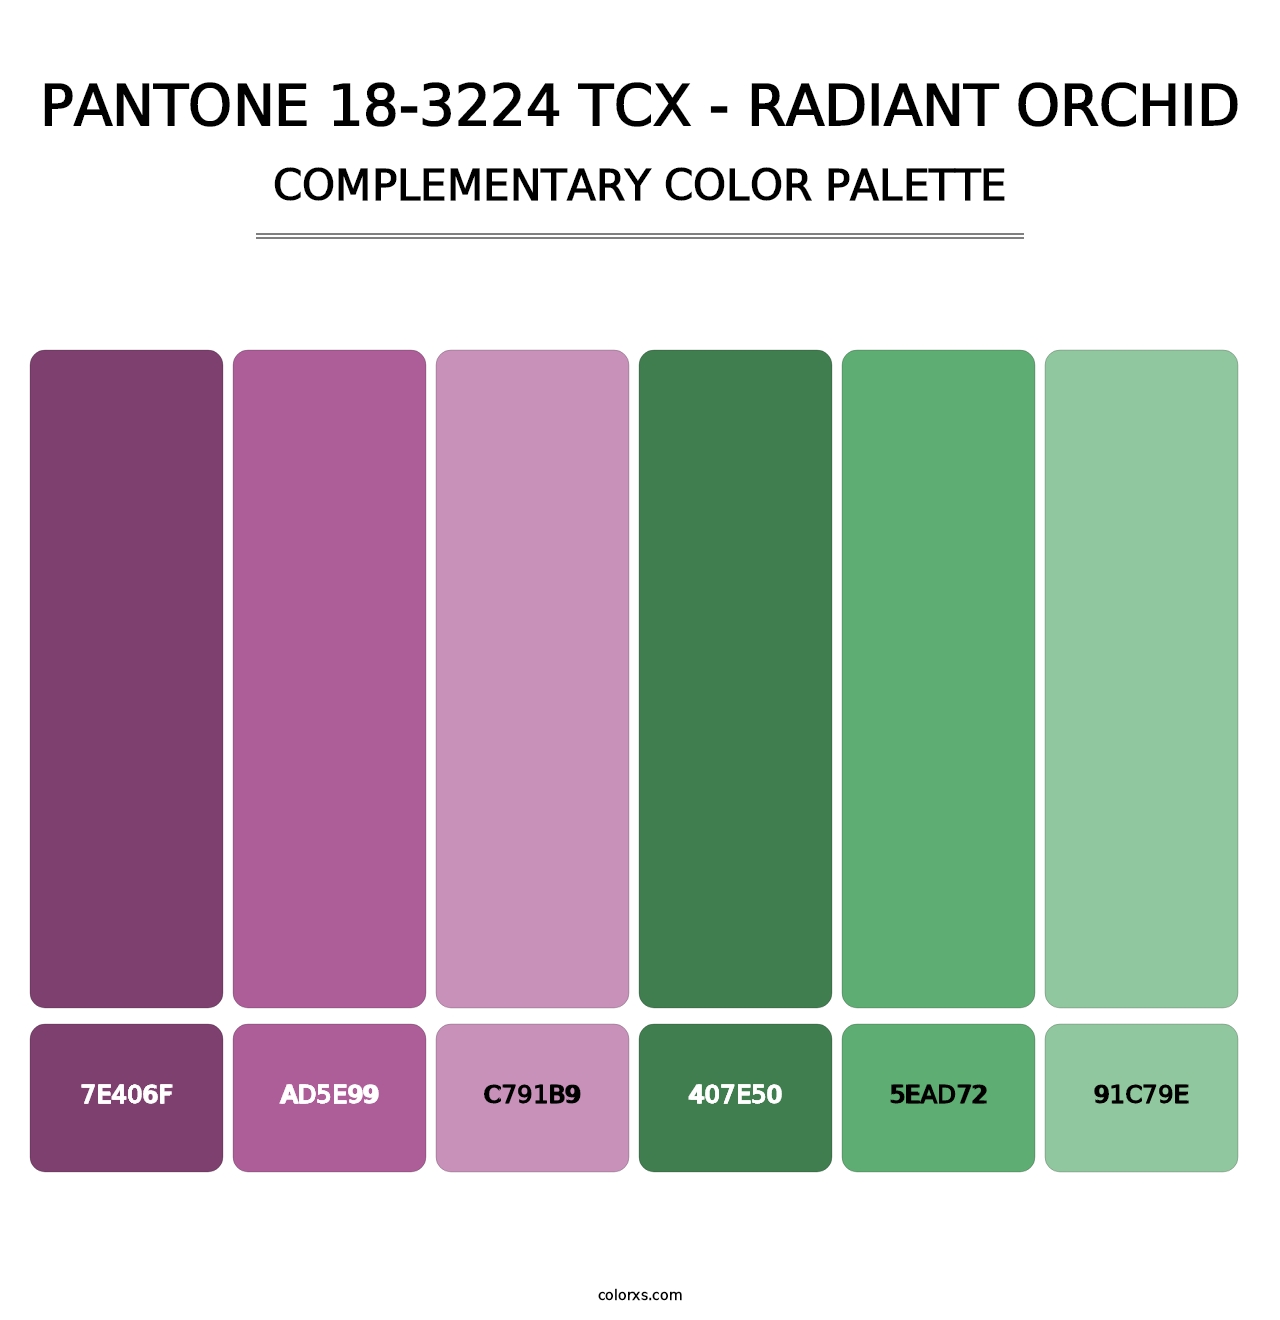 PANTONE 18-3224 TCX - Radiant Orchid - Complementary Color Palette